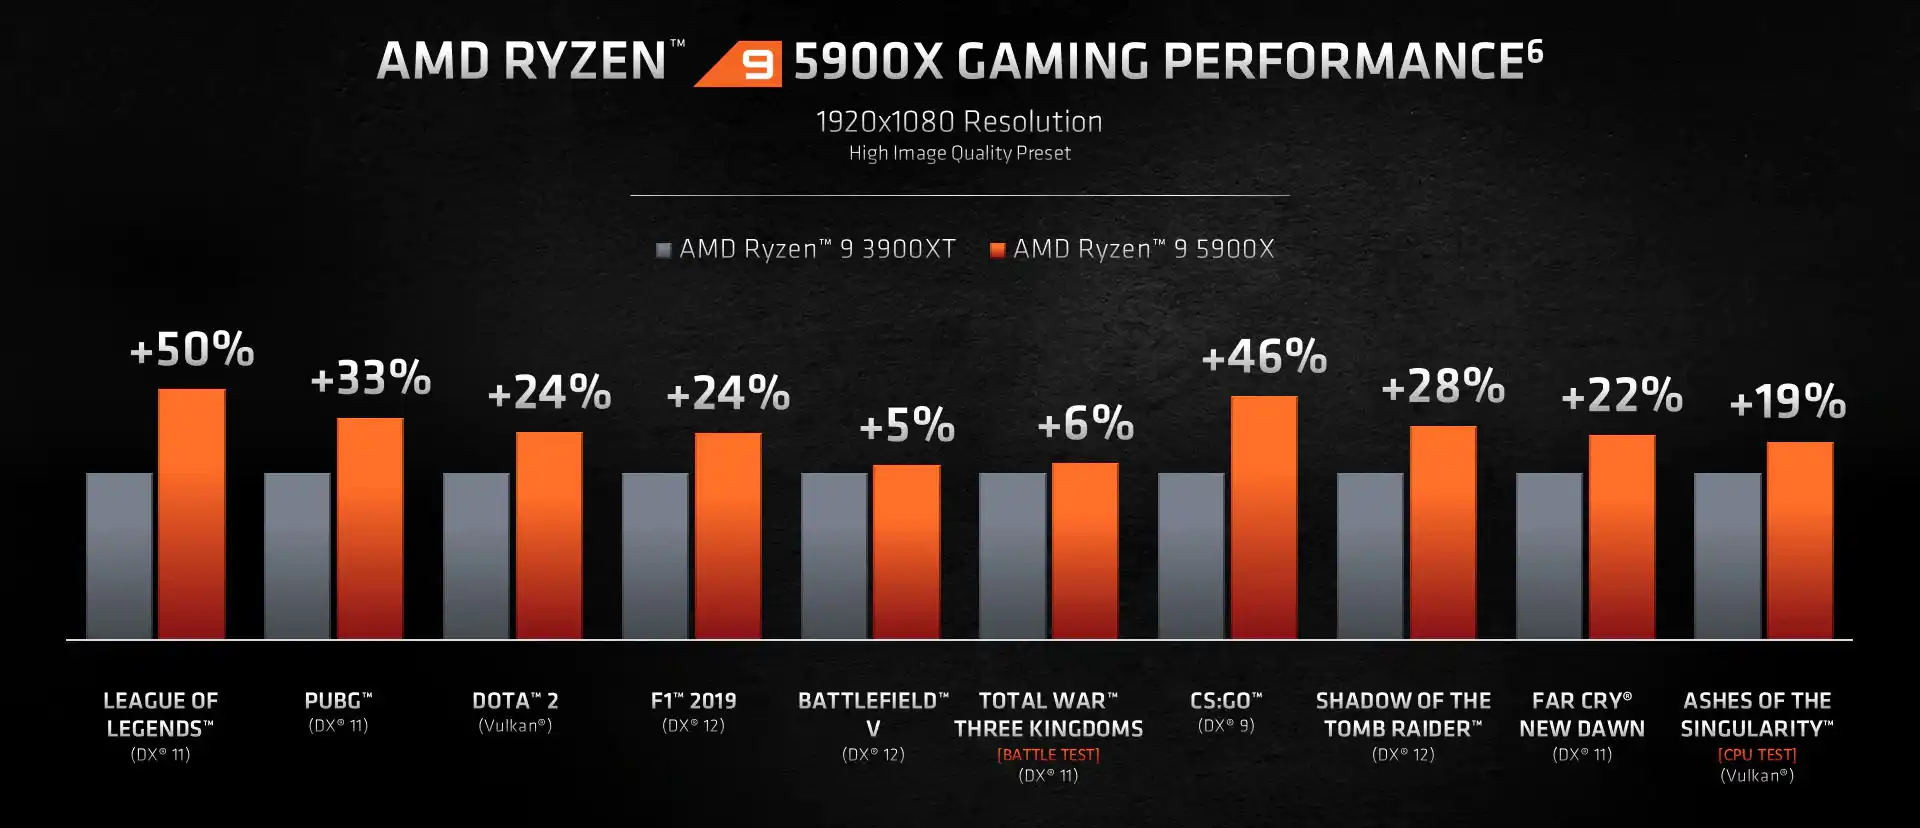 AMD Ryzen 5900X Gaming Performance